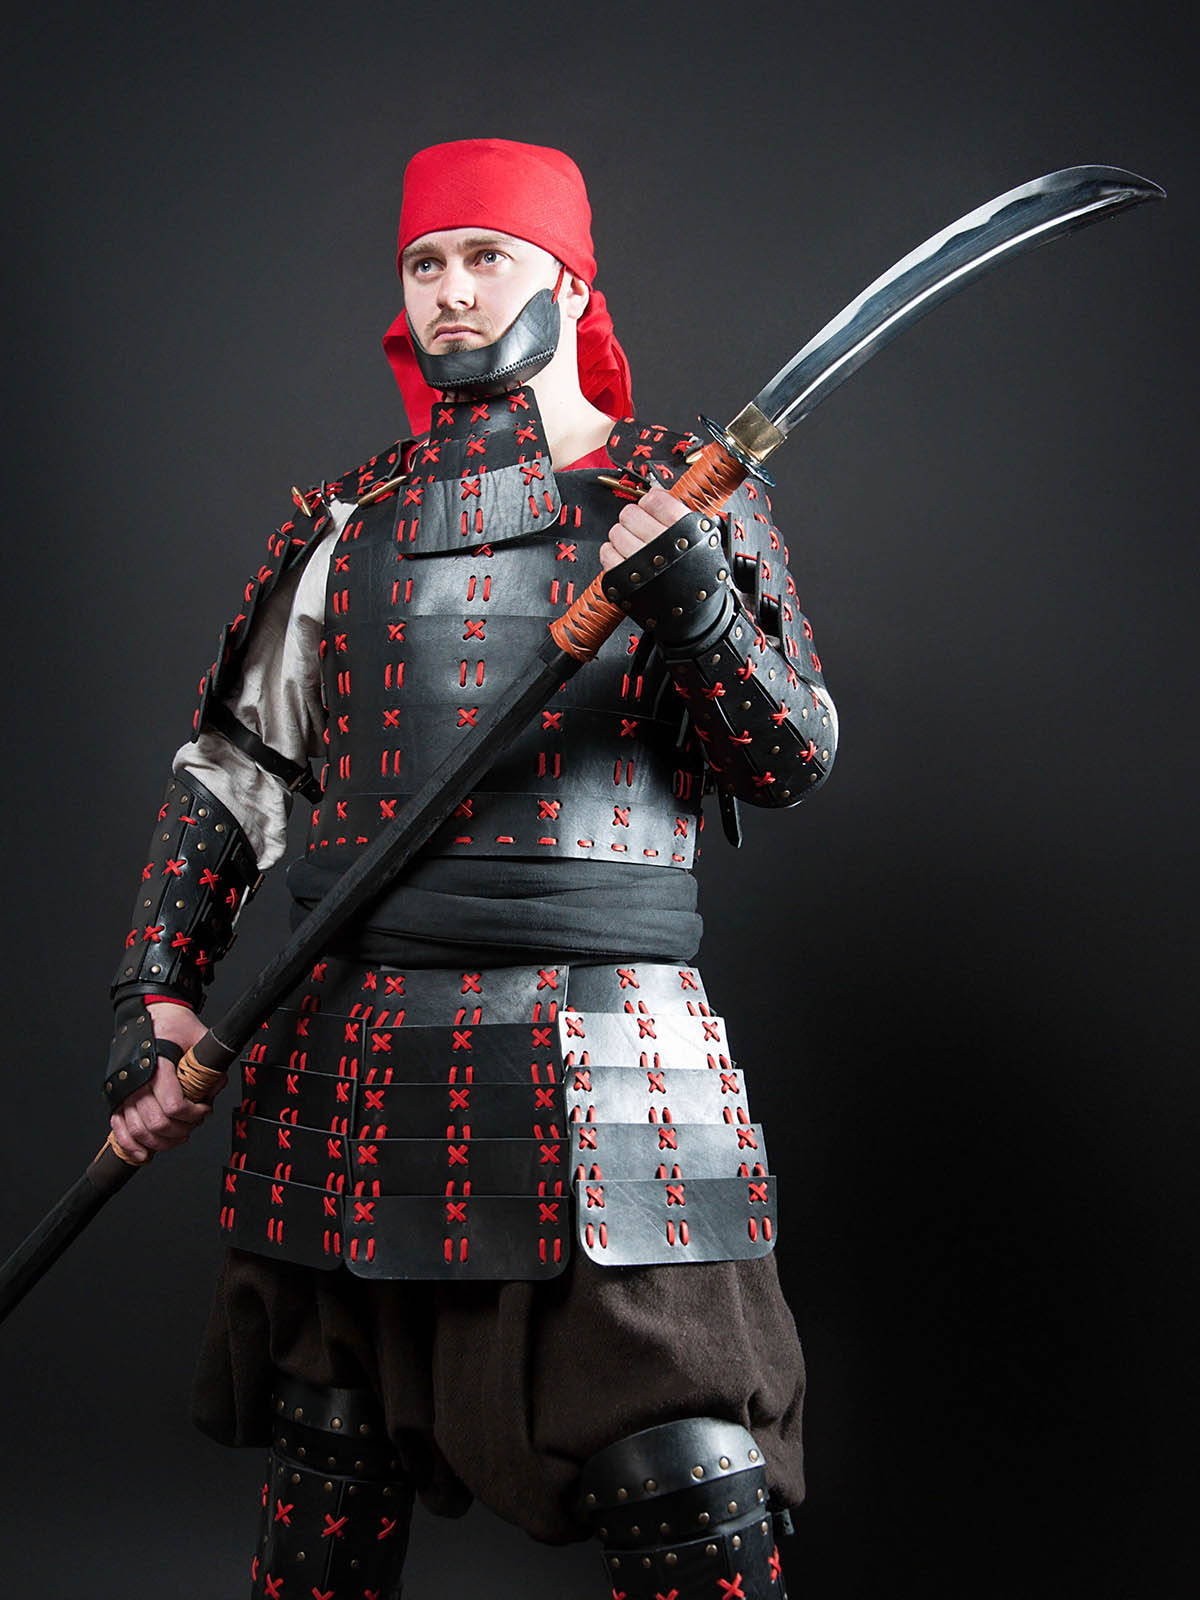 19+ Japanese Samurai Armor For Sale Pics